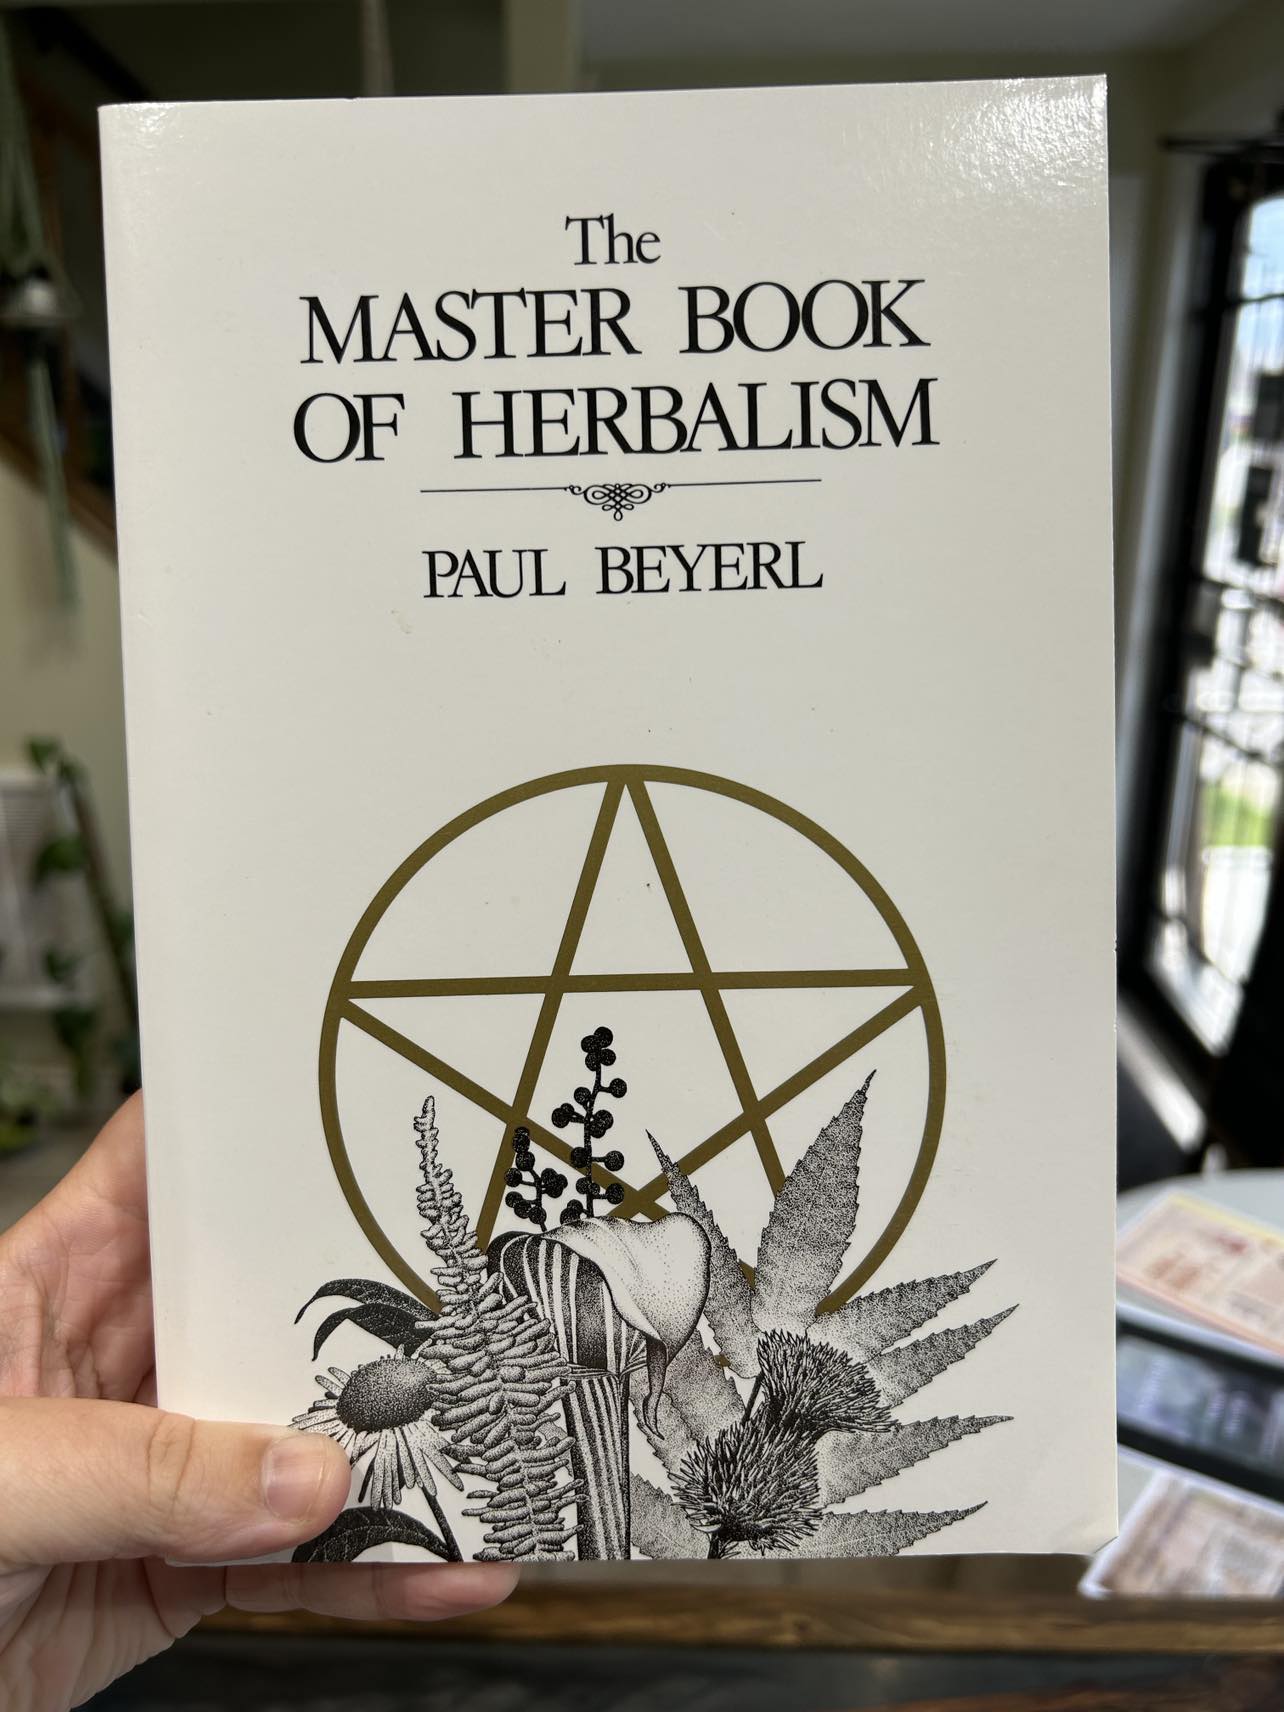 The master book of herbalism by Paul Beyerl